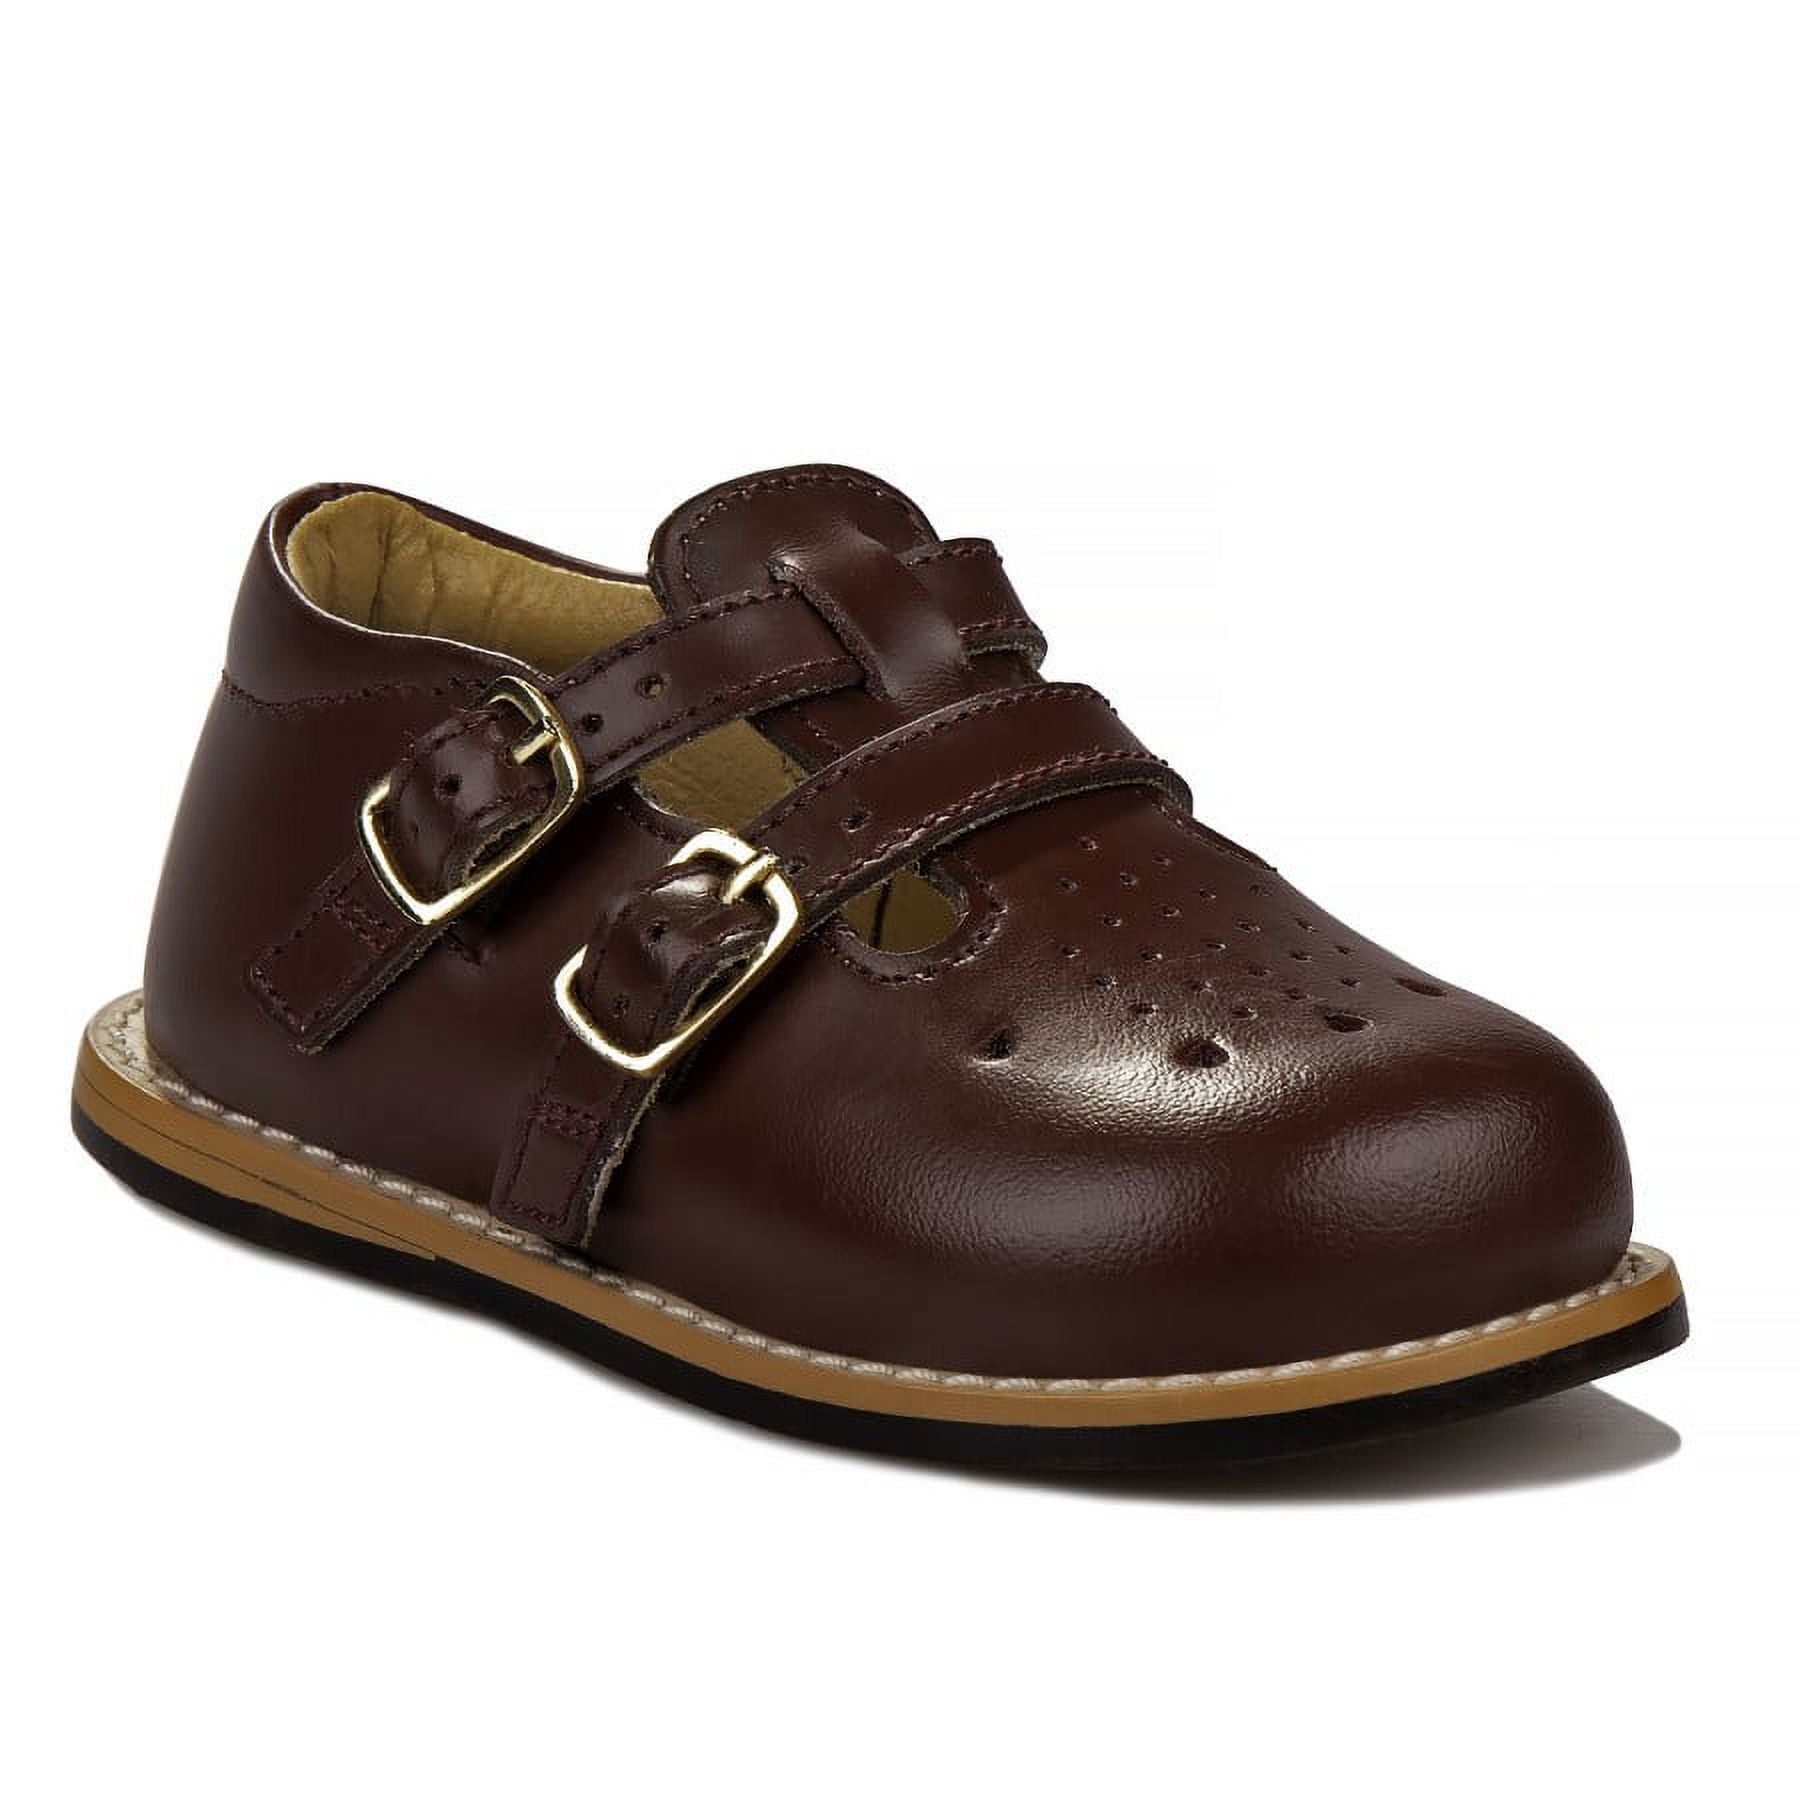 Josmo 8193 Buckle Toddlers' Wide Width Walking Shoes - Brown, 6 ...